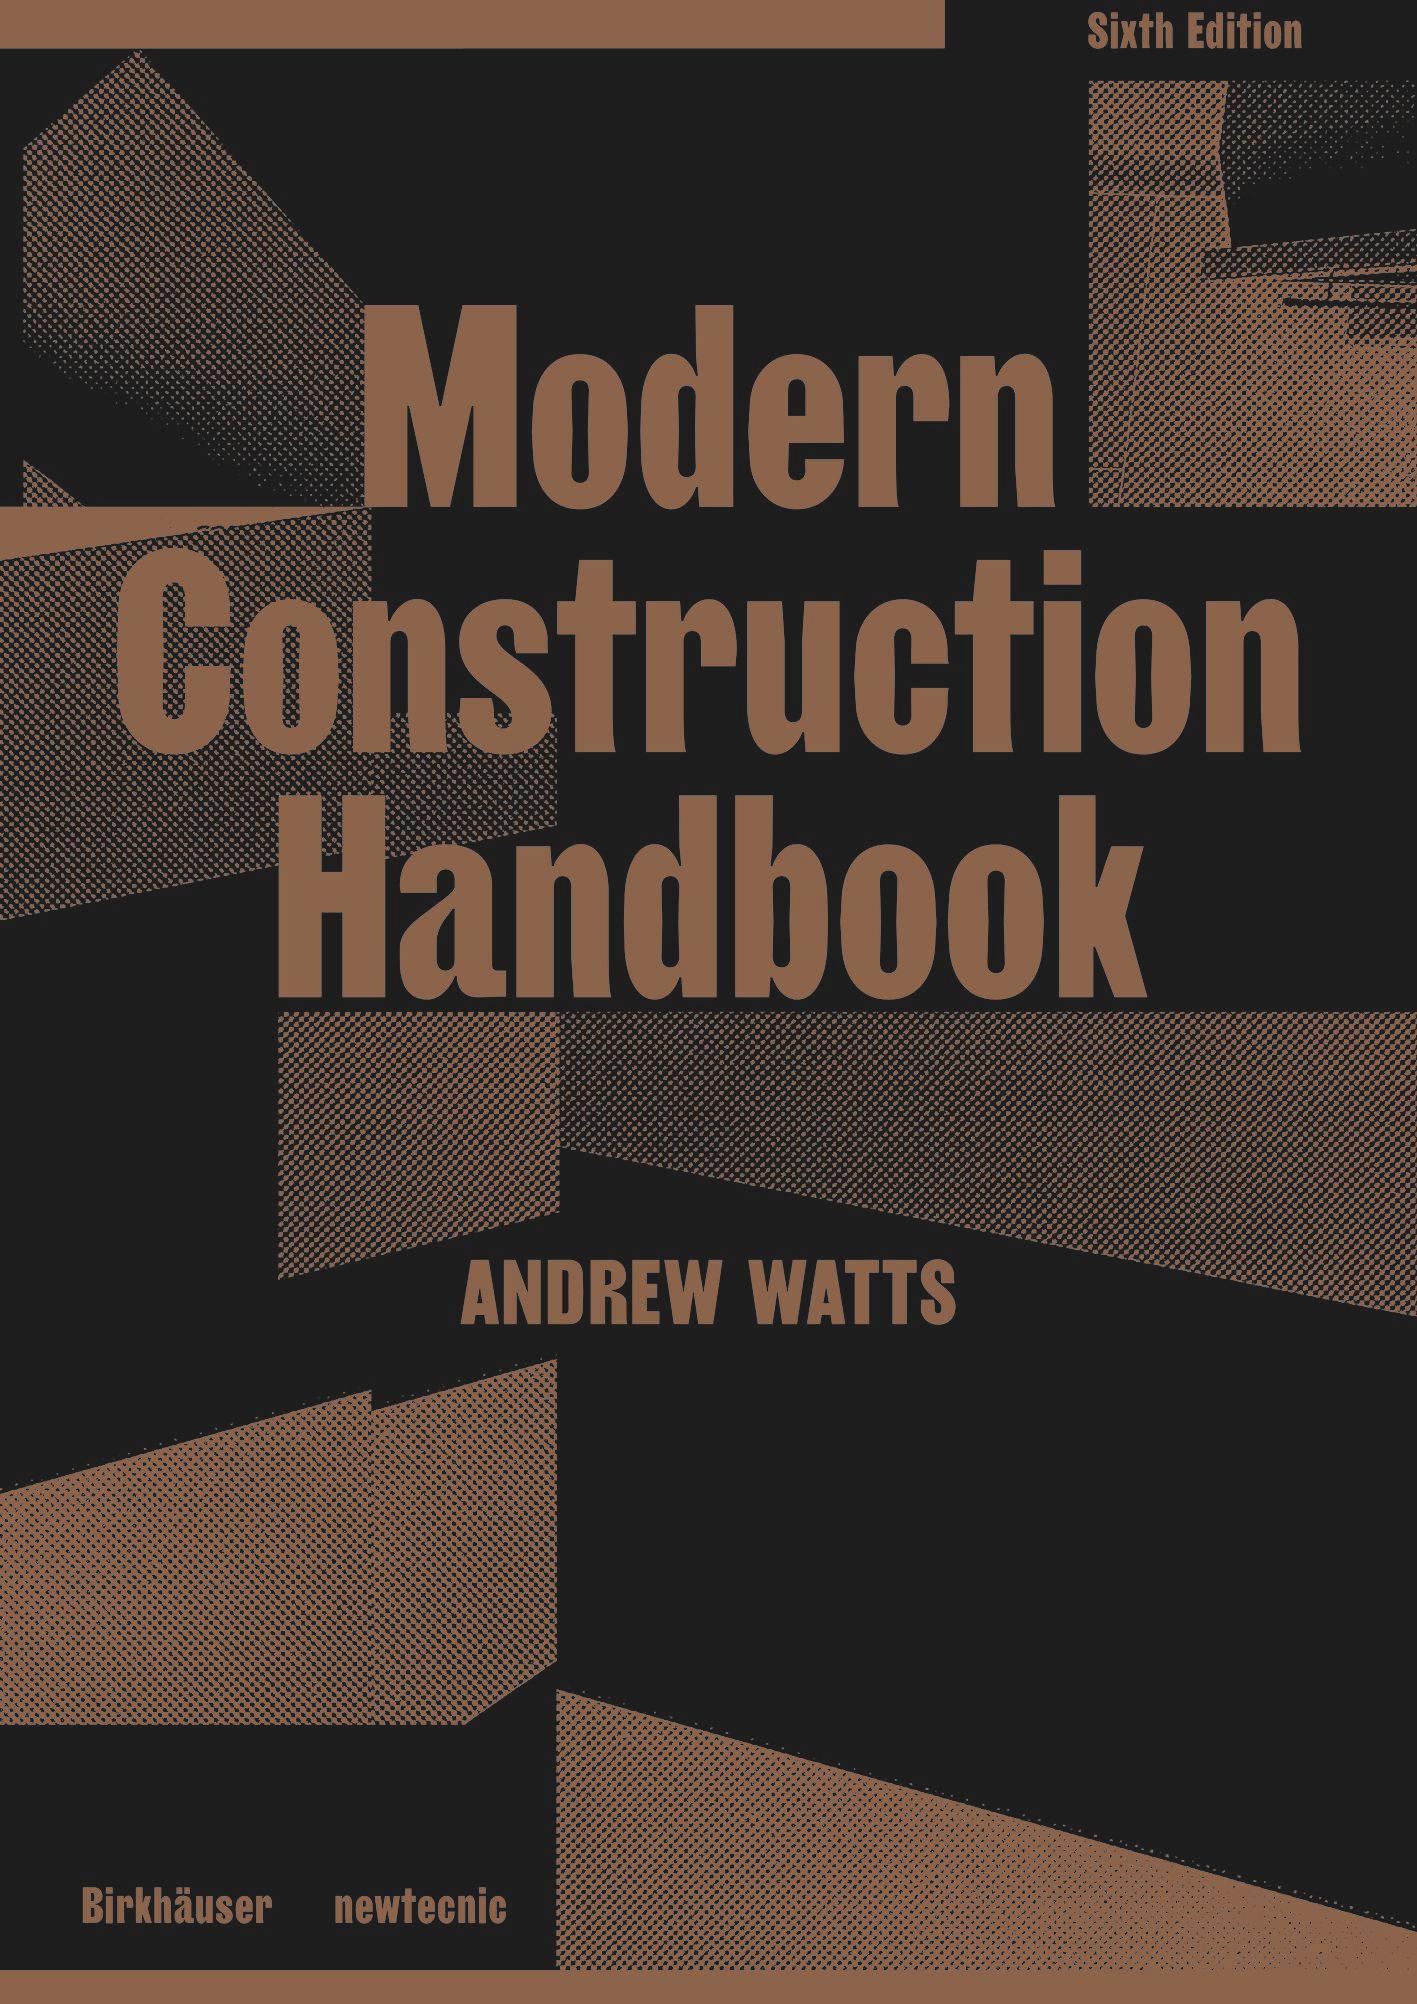 Modern Construction Handbook's cover